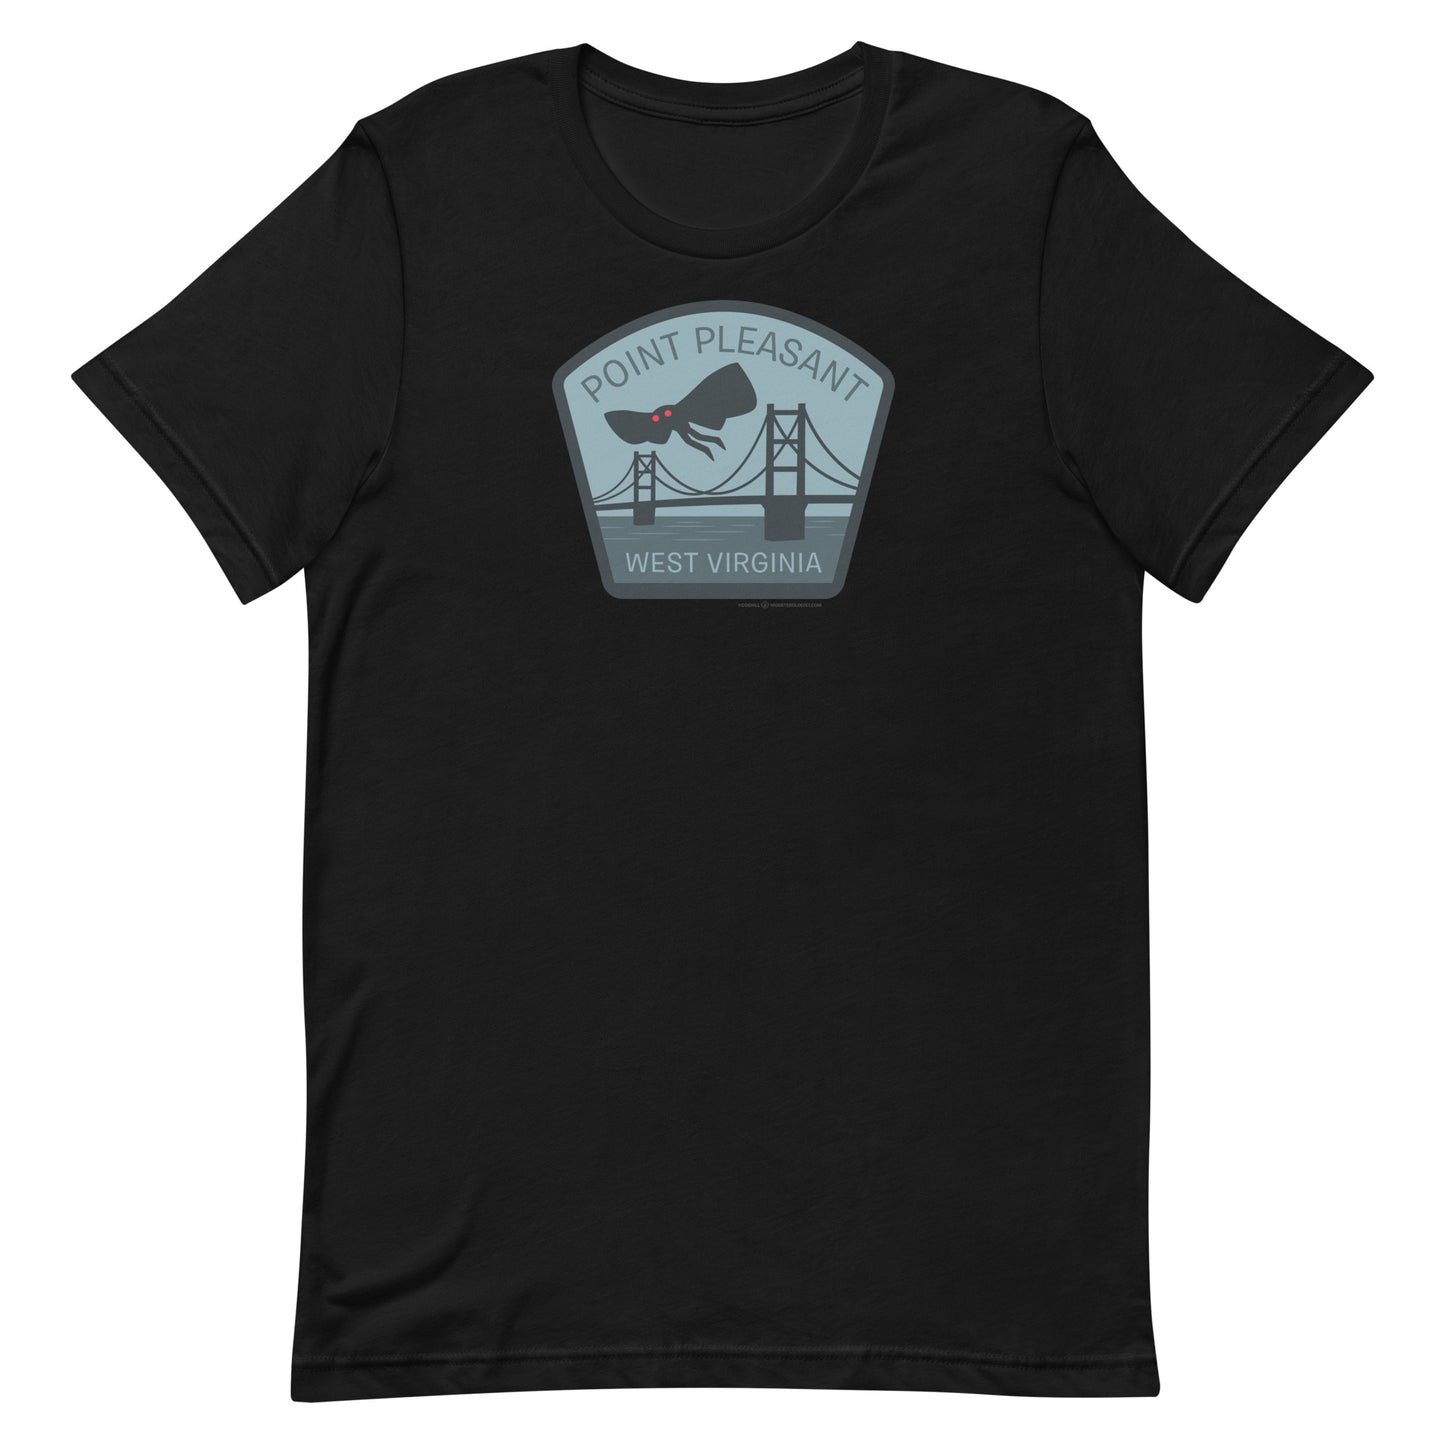 Point Pleasant, West Virginia (Mothman) T-Shirt